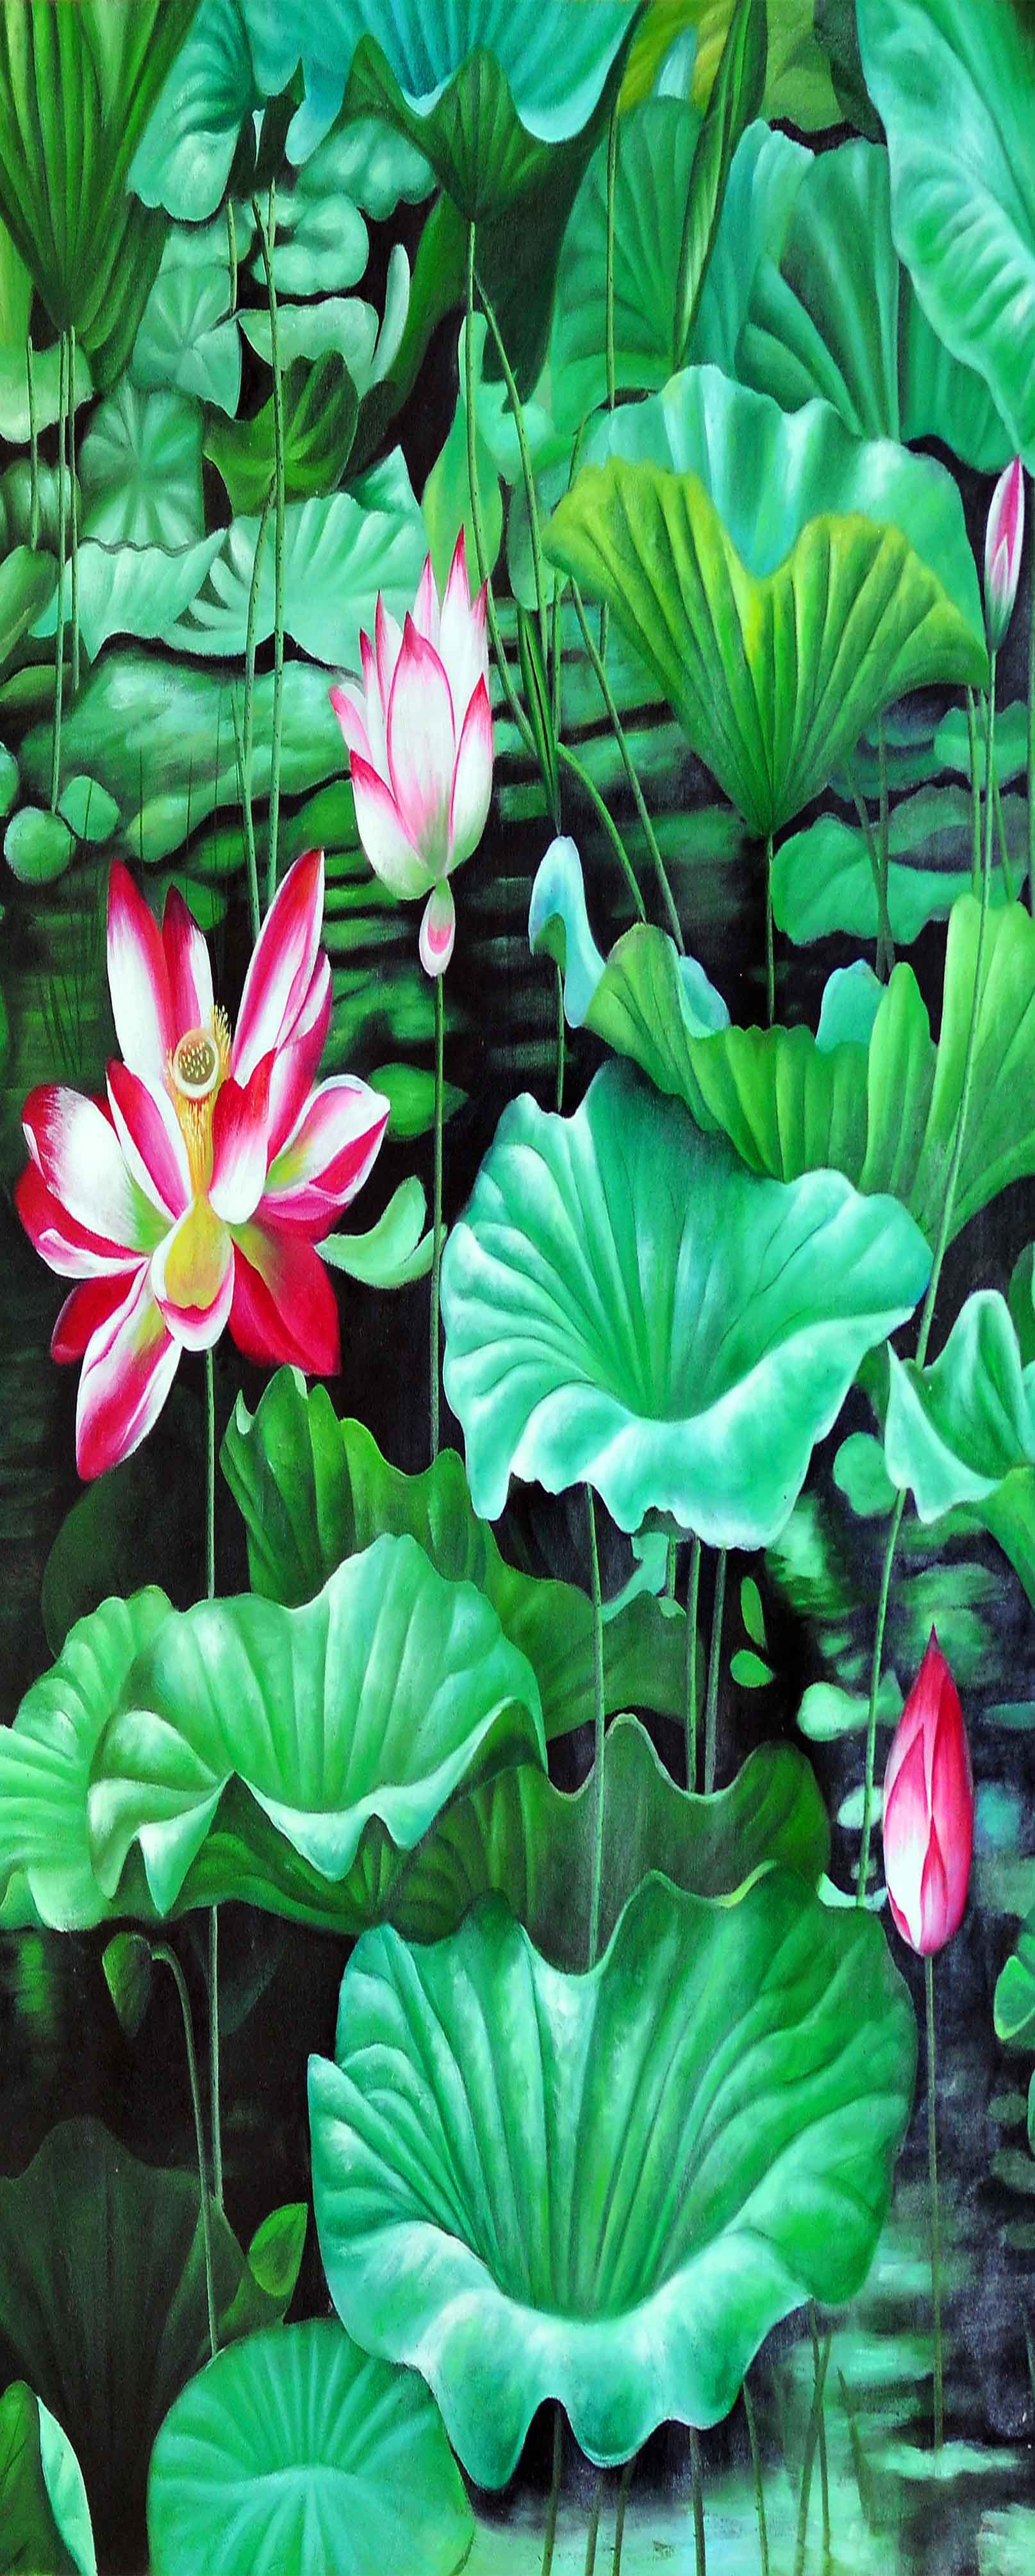 3D Lush Lotus Leaves 1187 Stair Risers Wallpaper AJ Wallpaper 